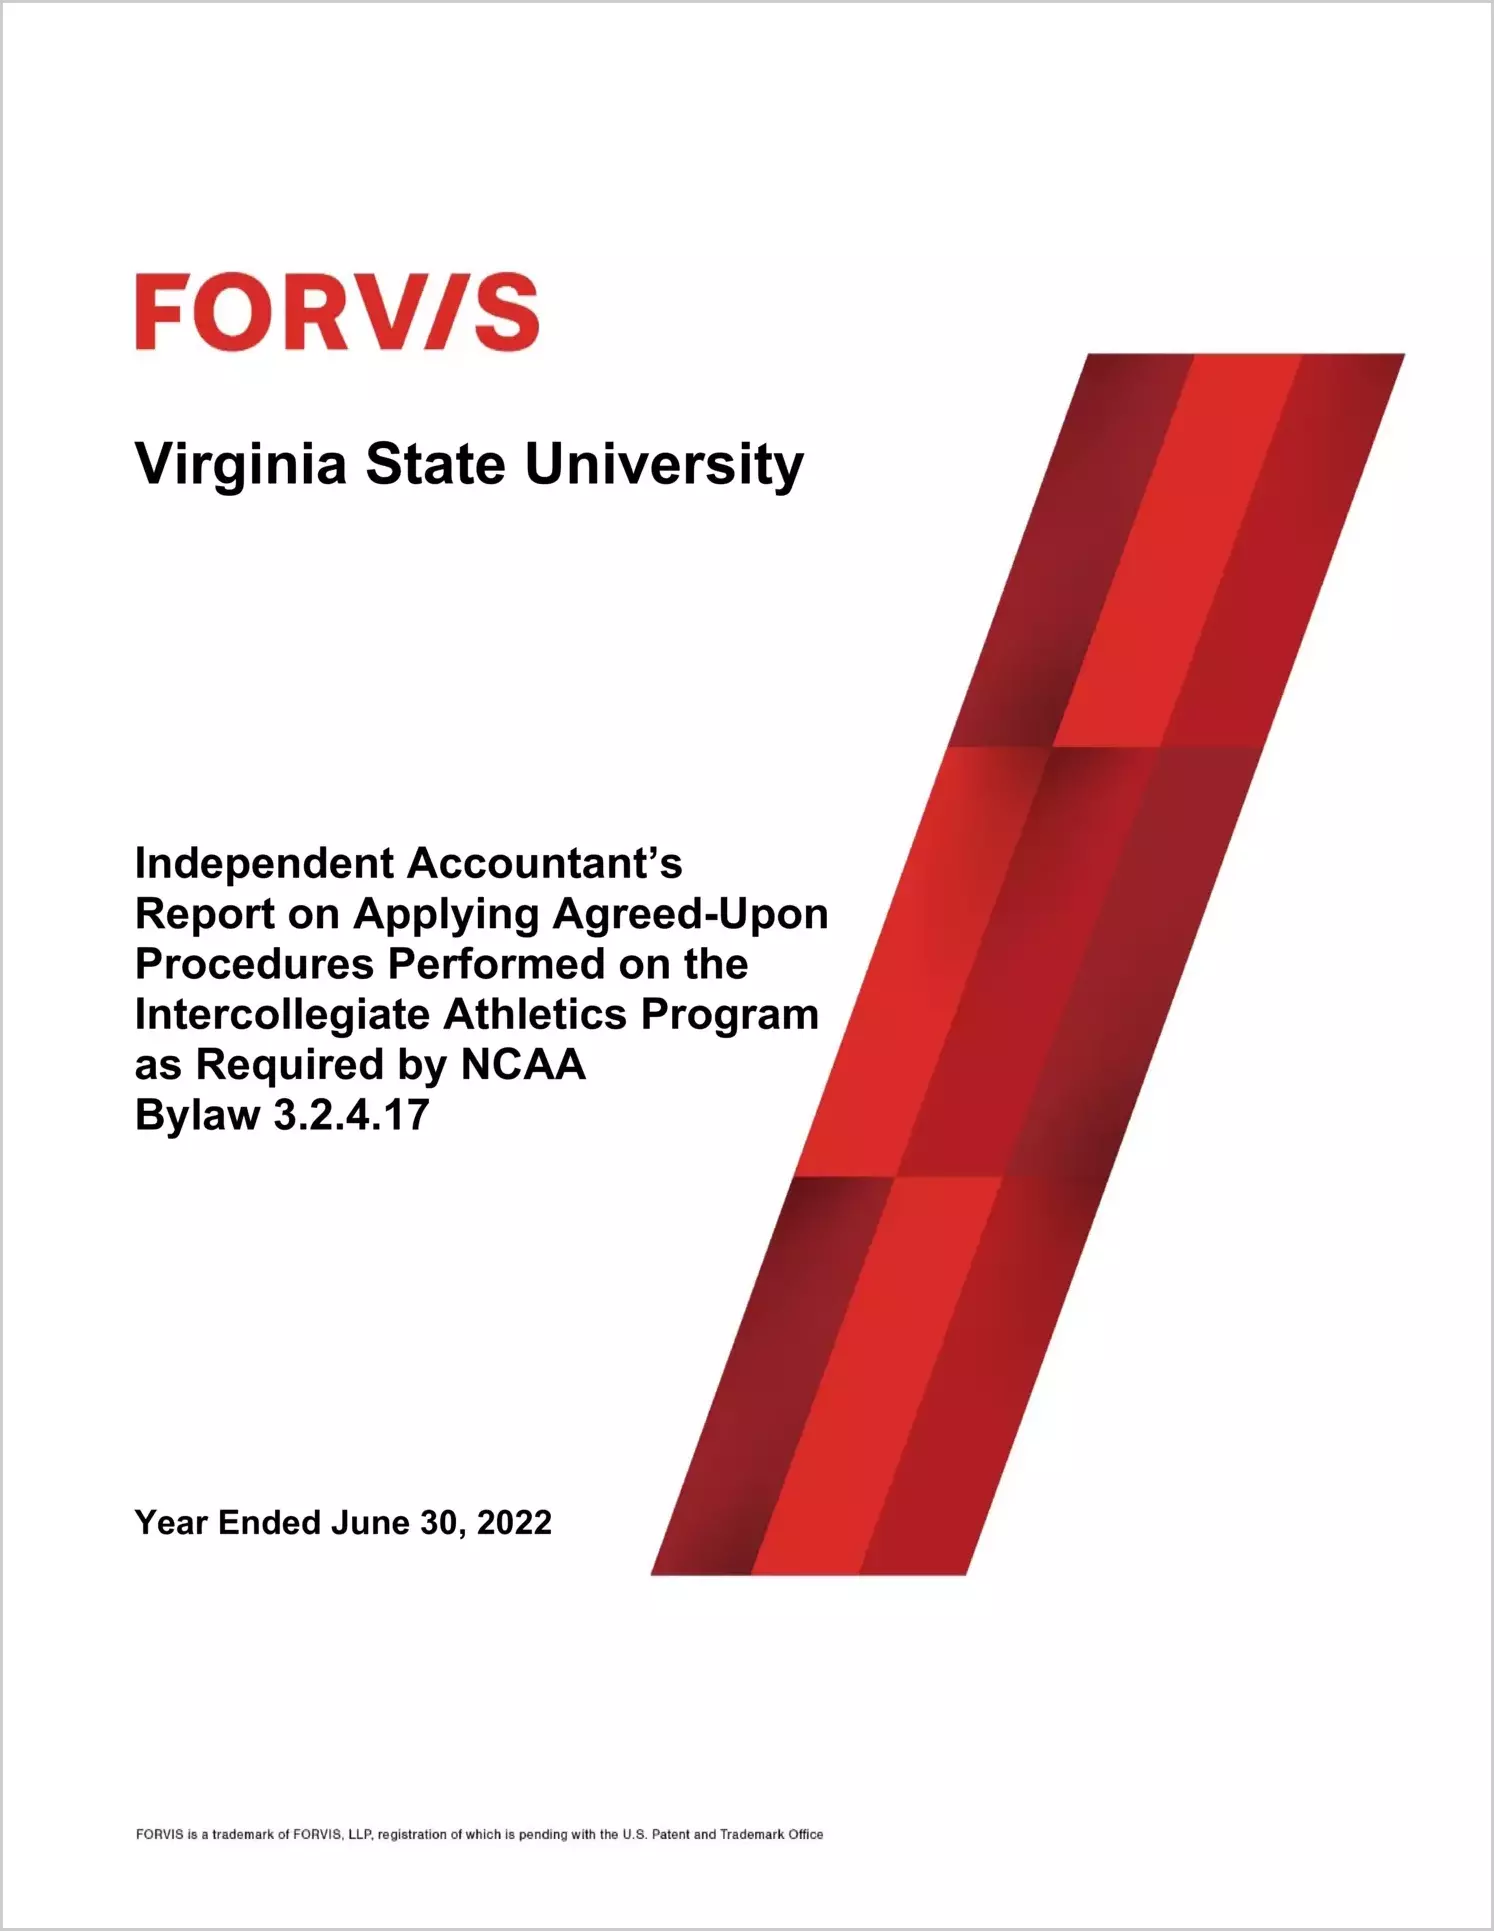 Virginia State University Intercollegiate Athletics Programs for the year ended June 30, 2022